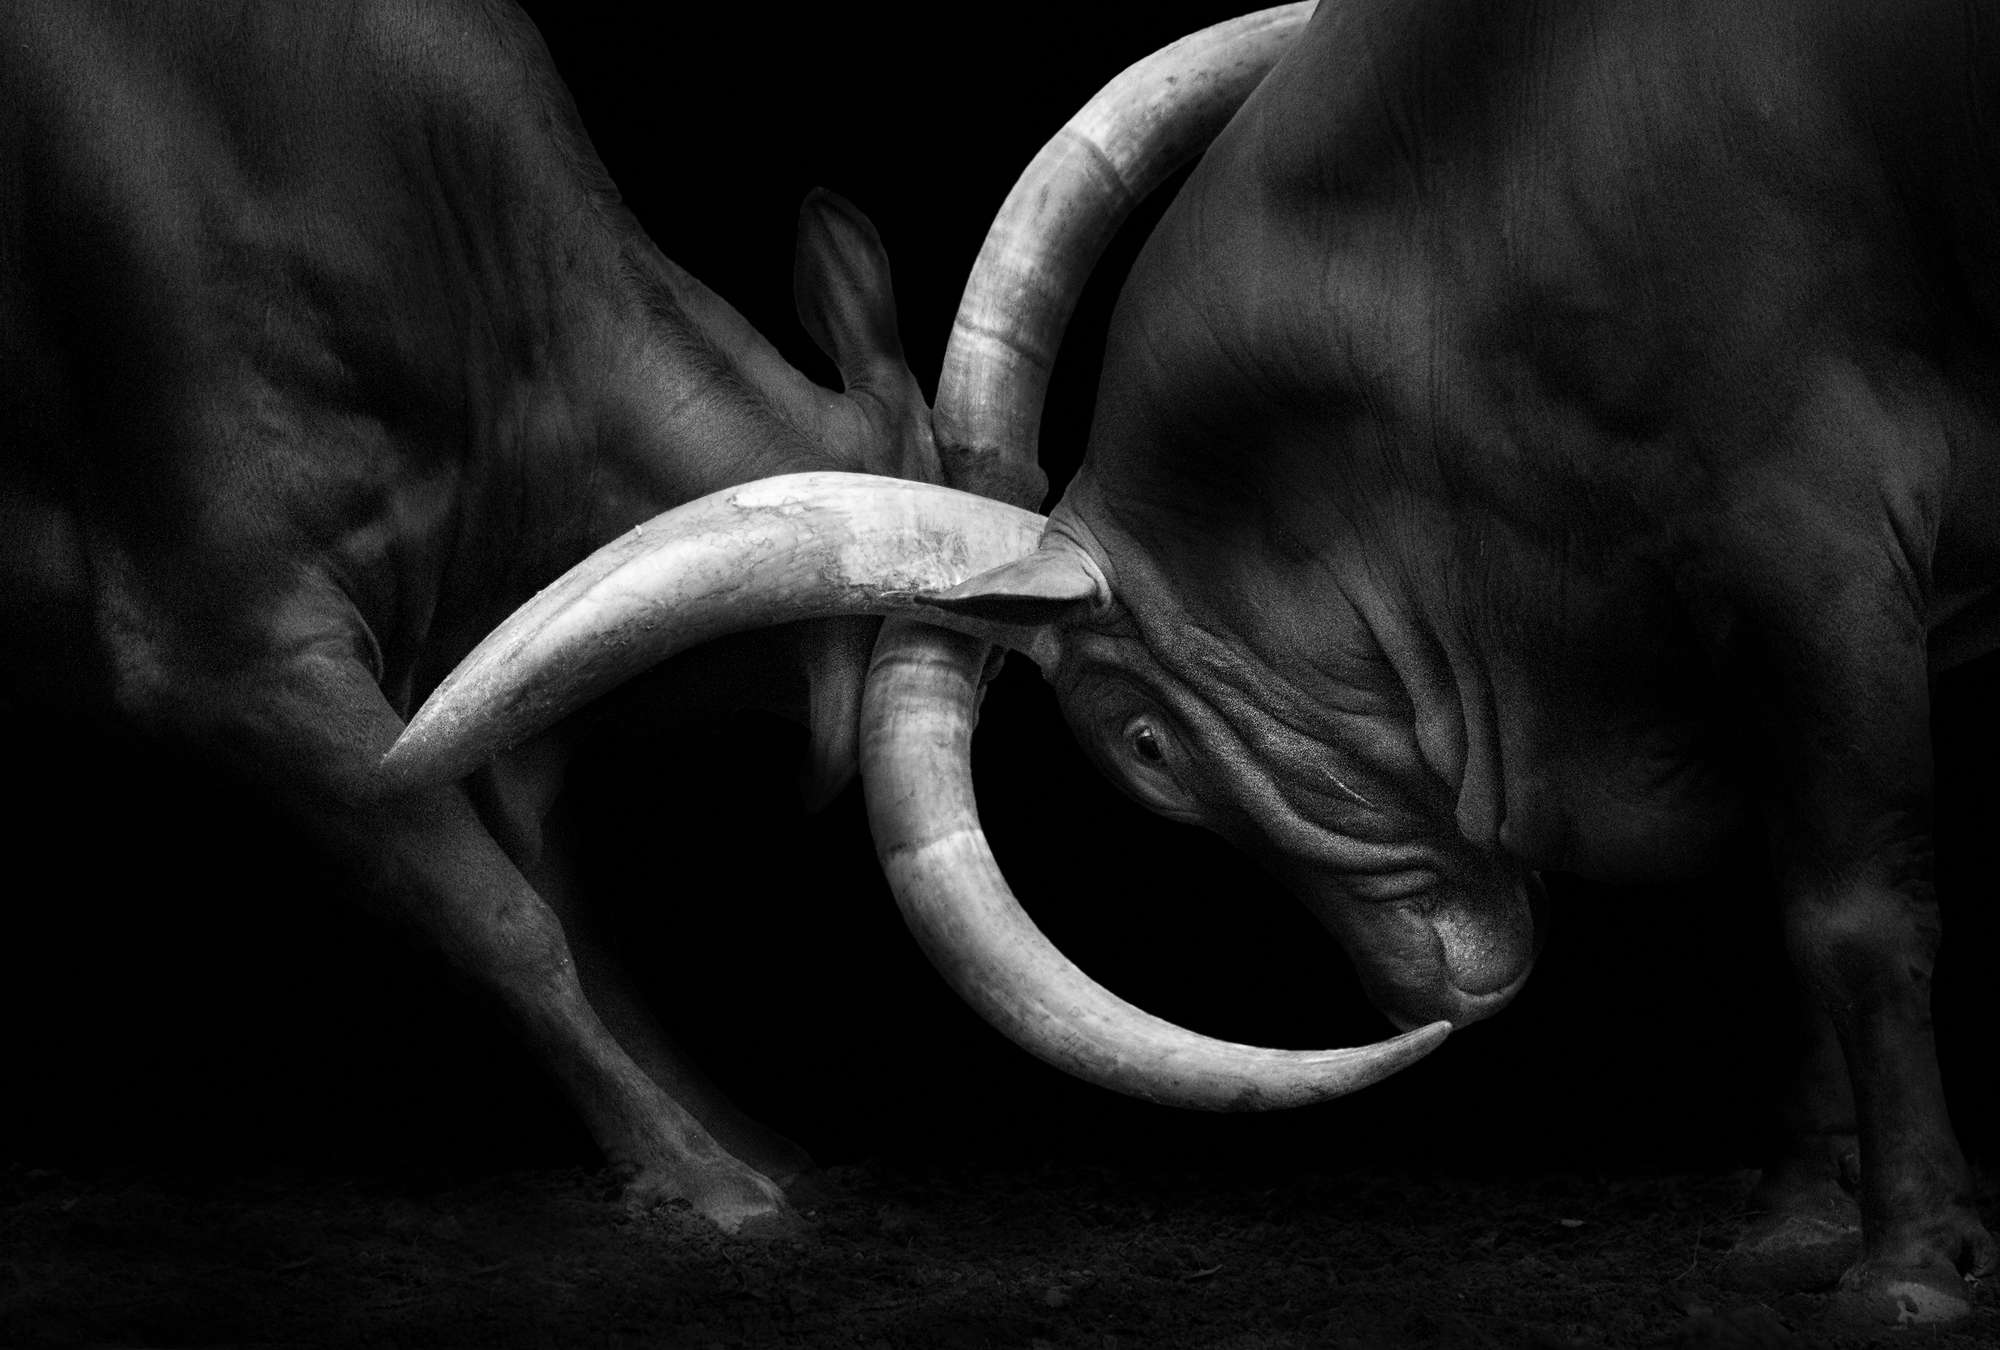             Bullfighting mural - close up black and white
        